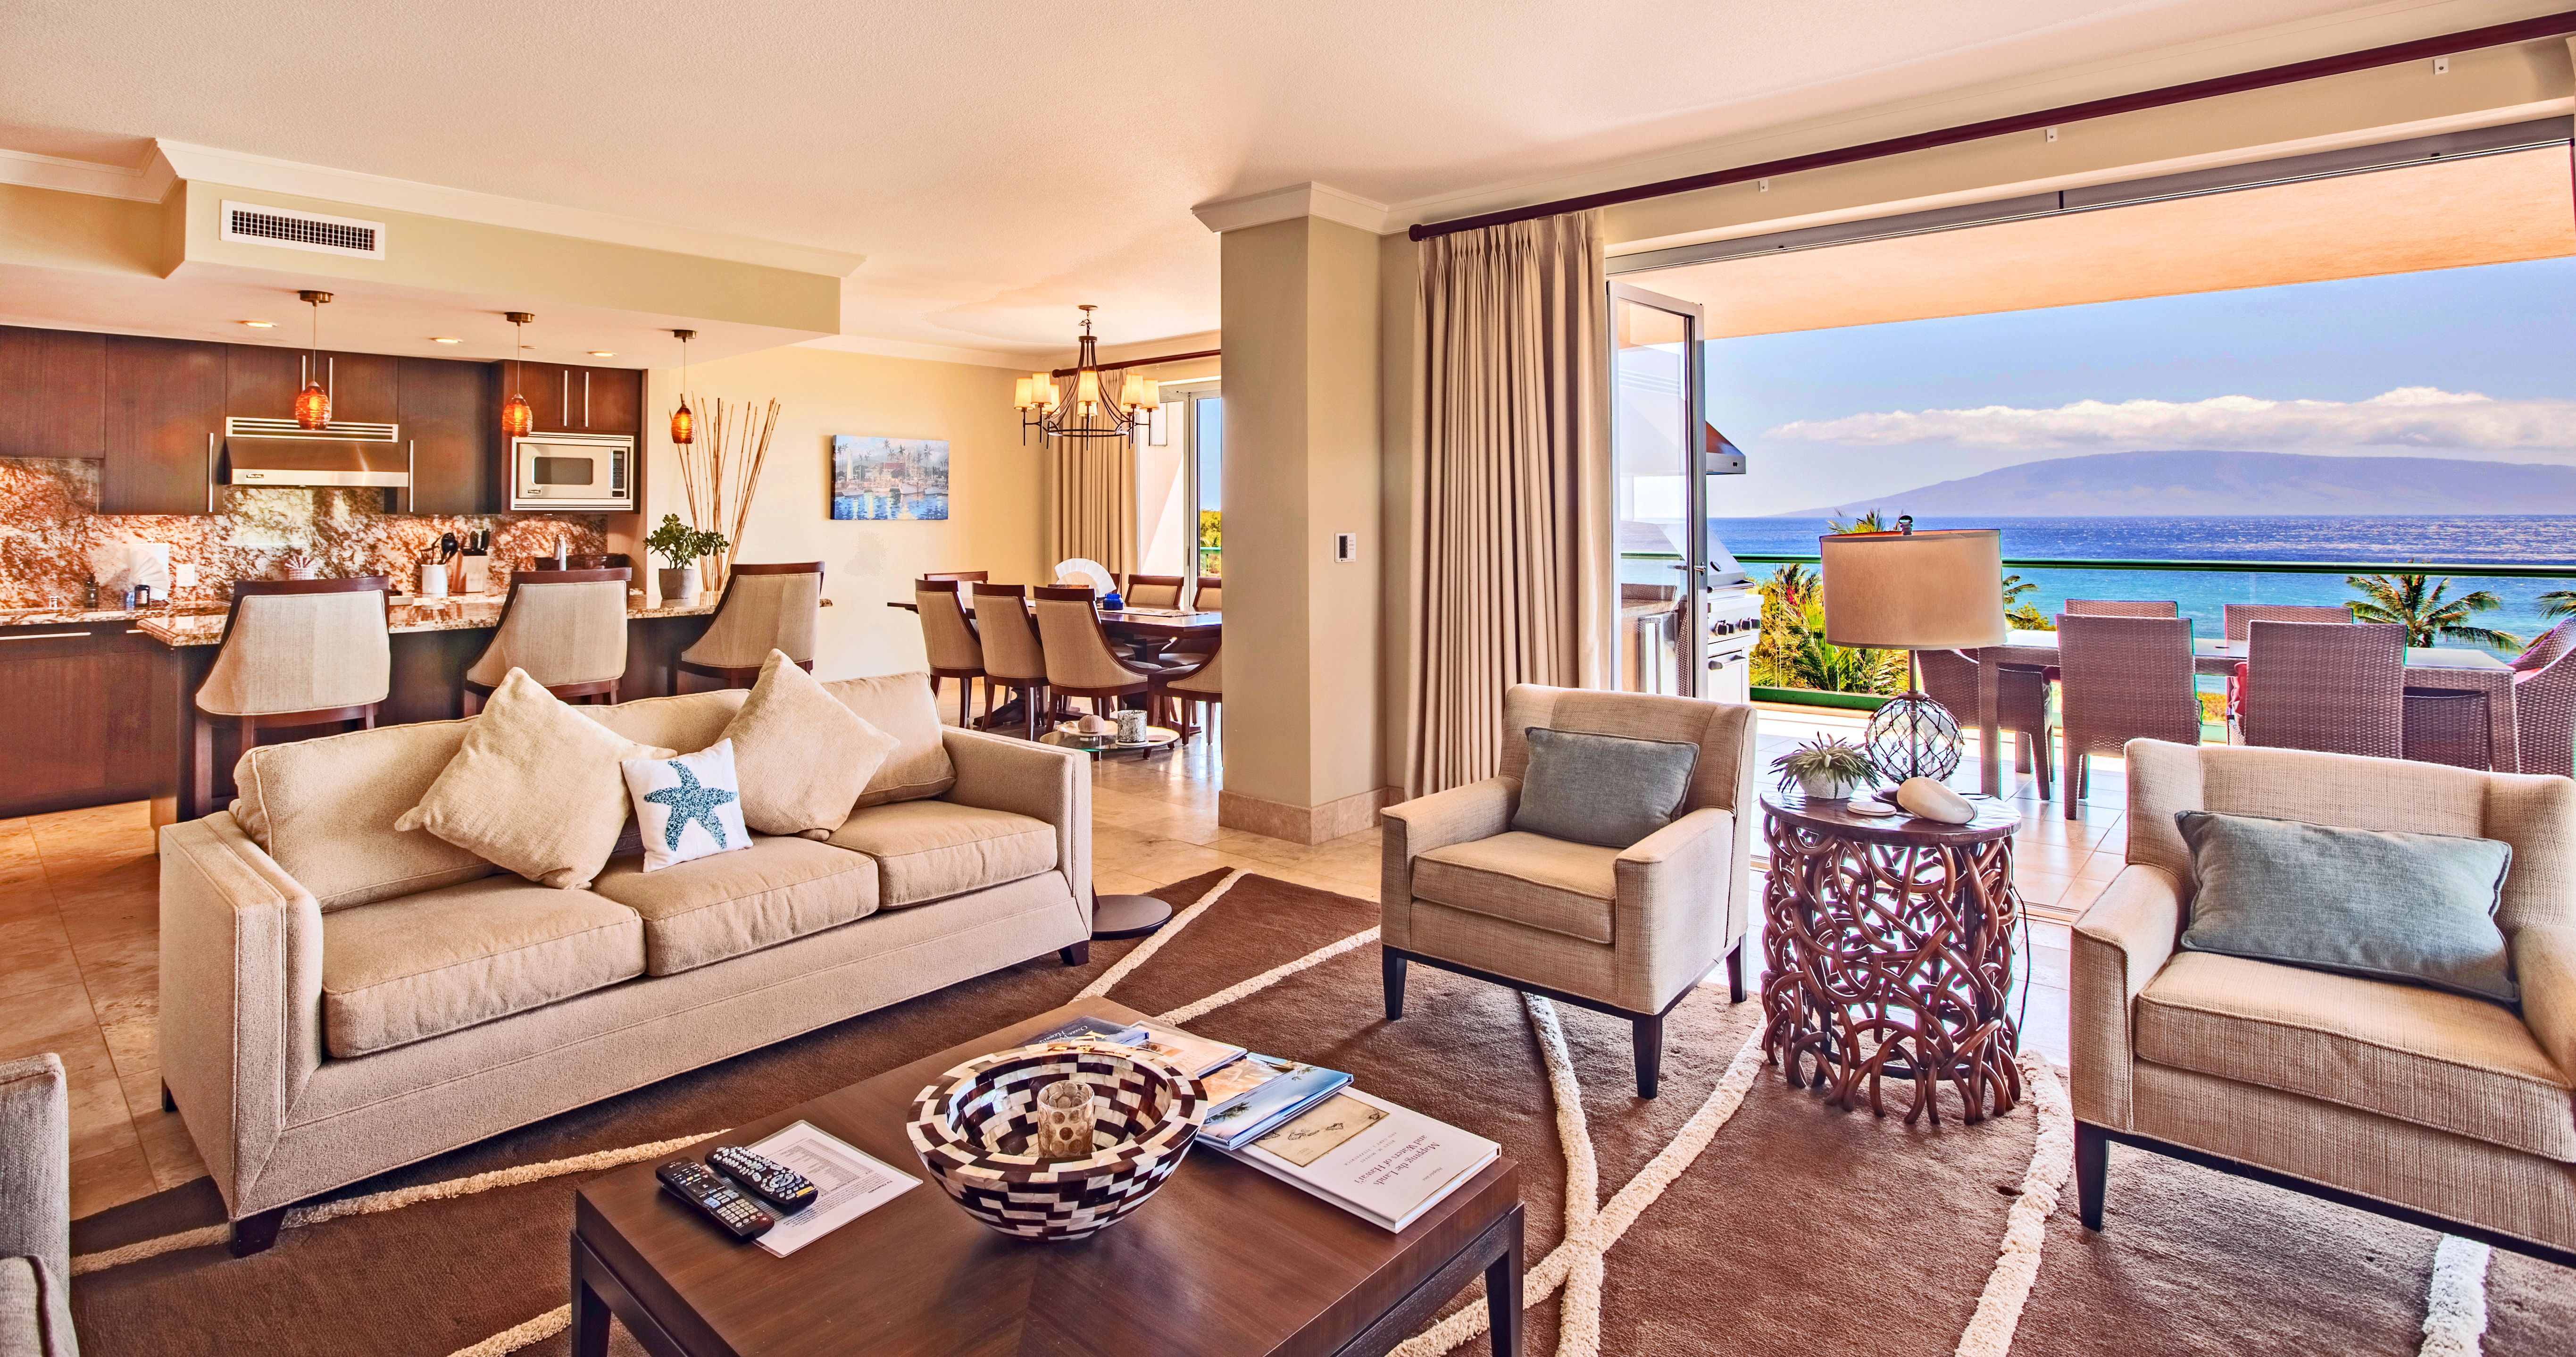 Gorgeous KBM Hawaii managed luxury villa!